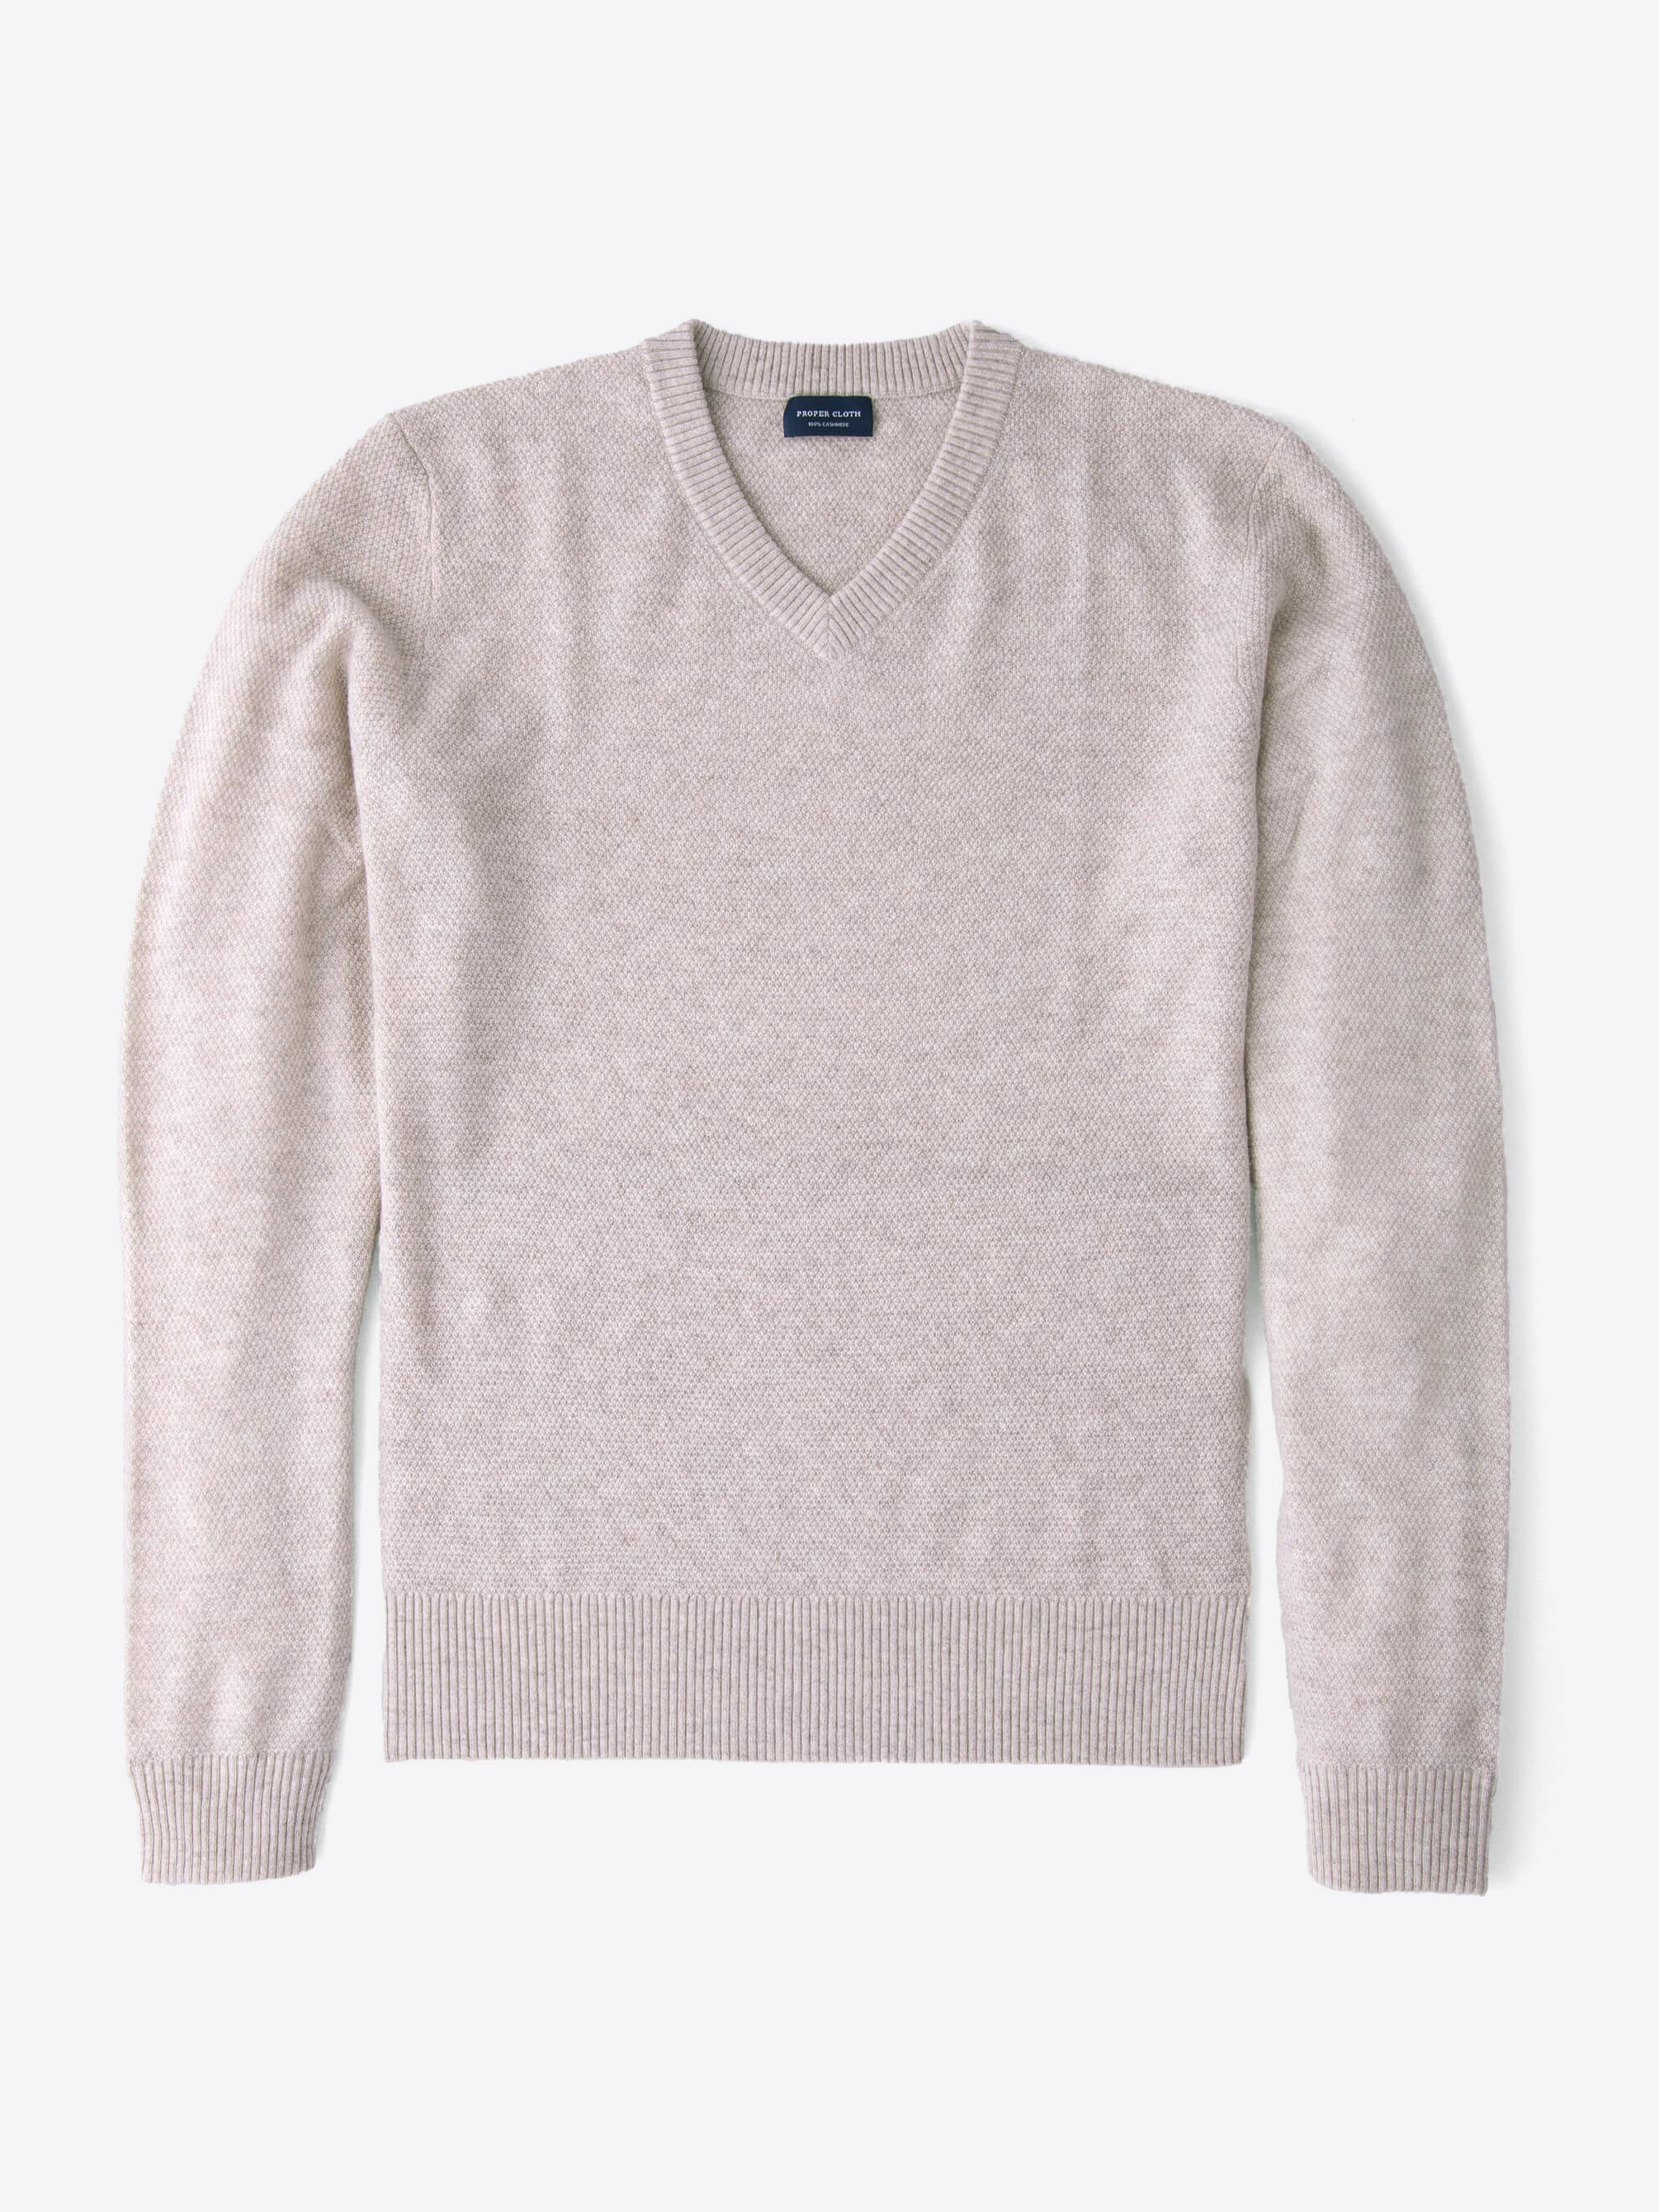 Zoom Image of Wheat Cobble Stitch Cashmere V-Neck Sweater